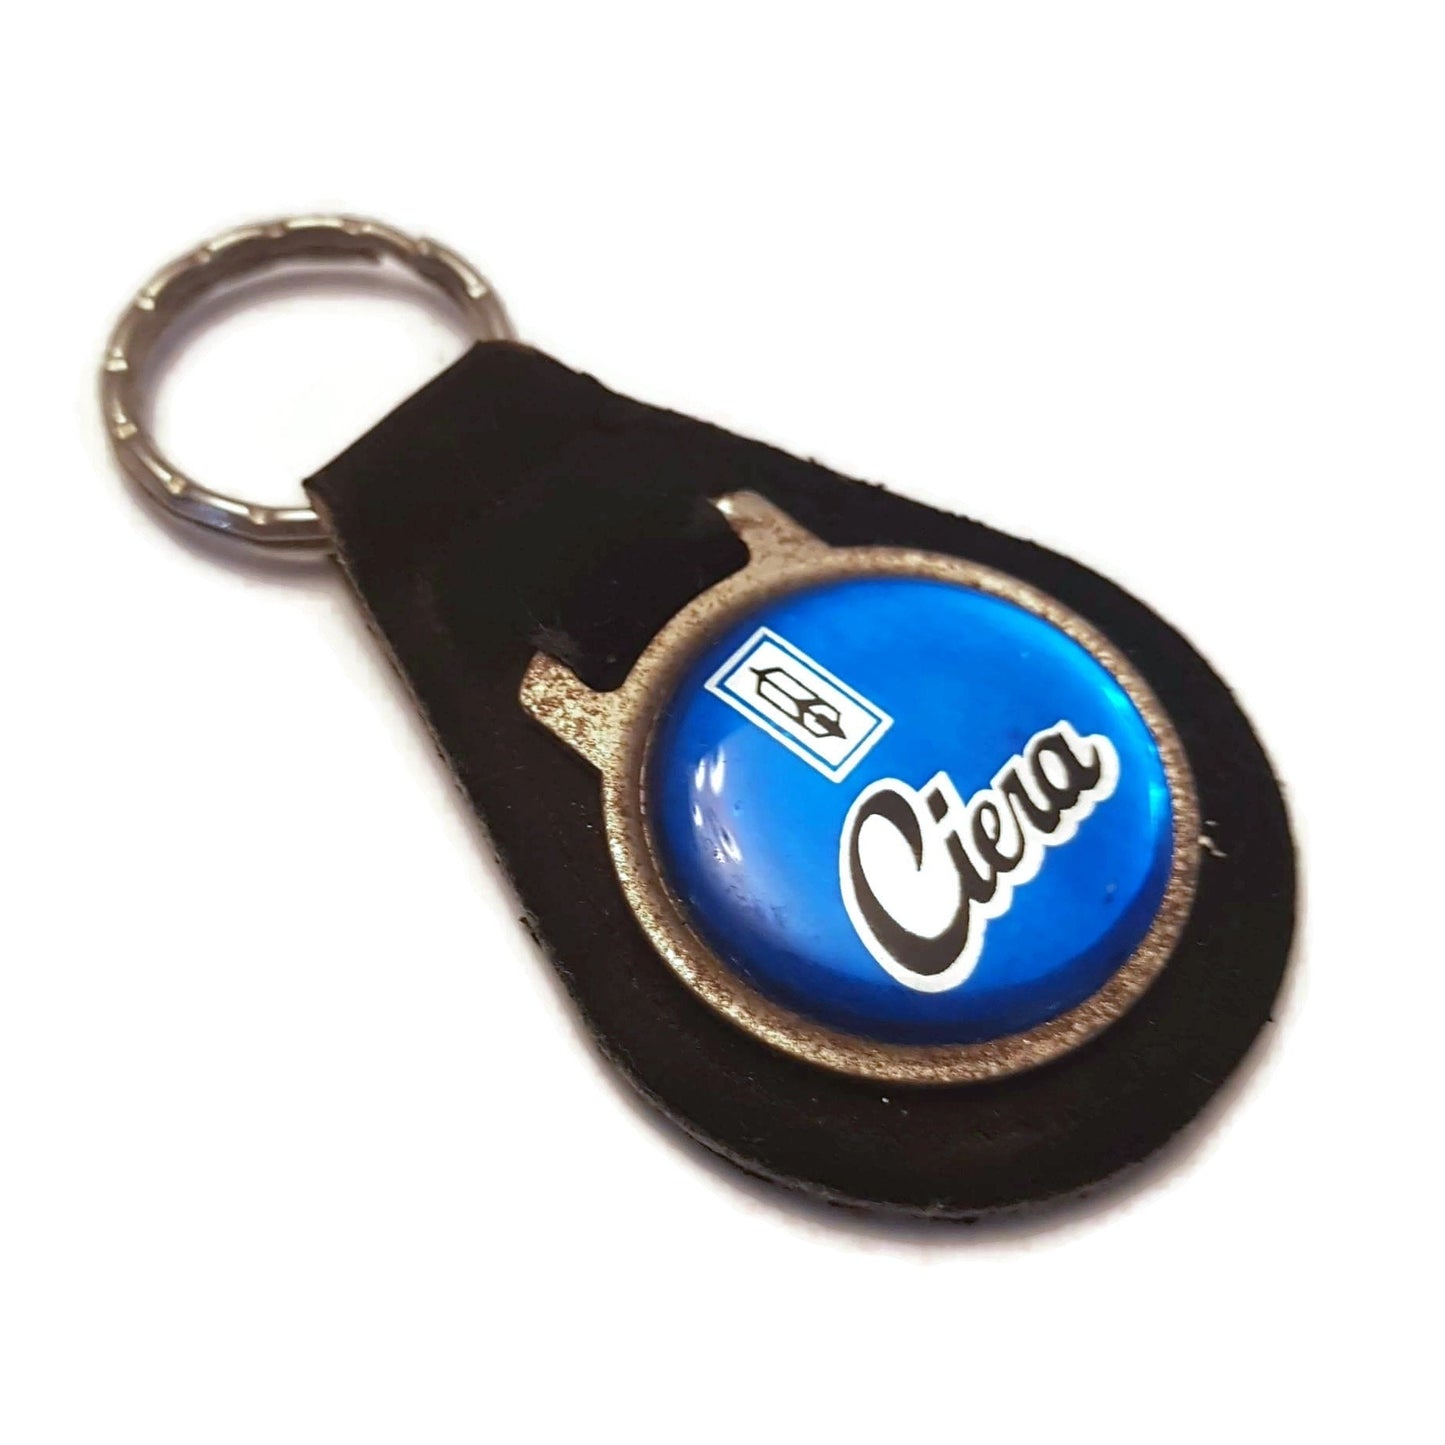 cutlas ciera key chain keychain key fob keytag vintage automotove keychain gift collectible